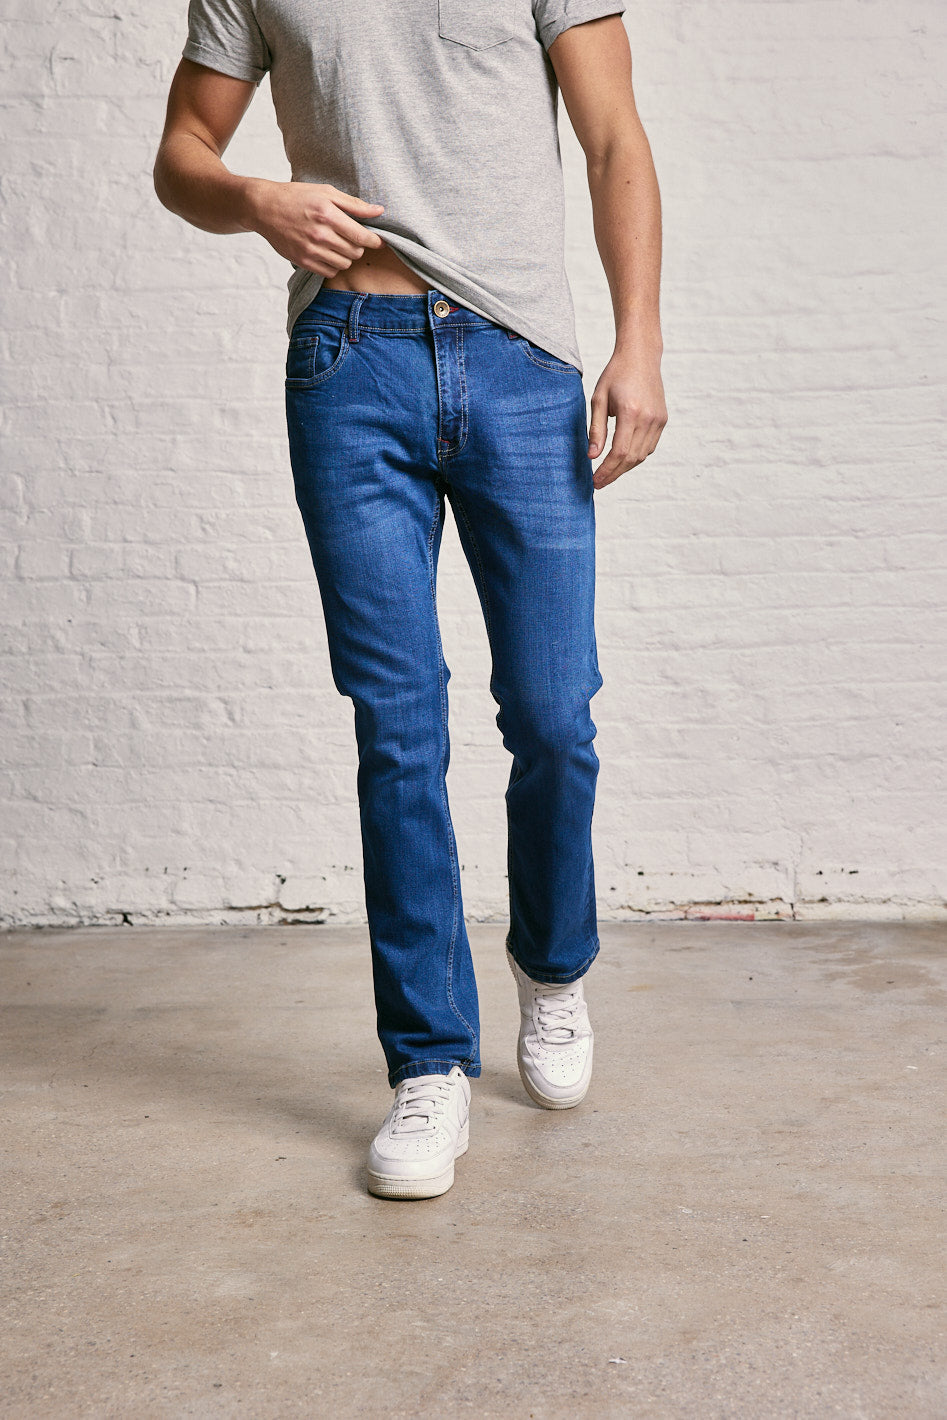 Straight slim fit Jeans for Men Denim Pants - Blue